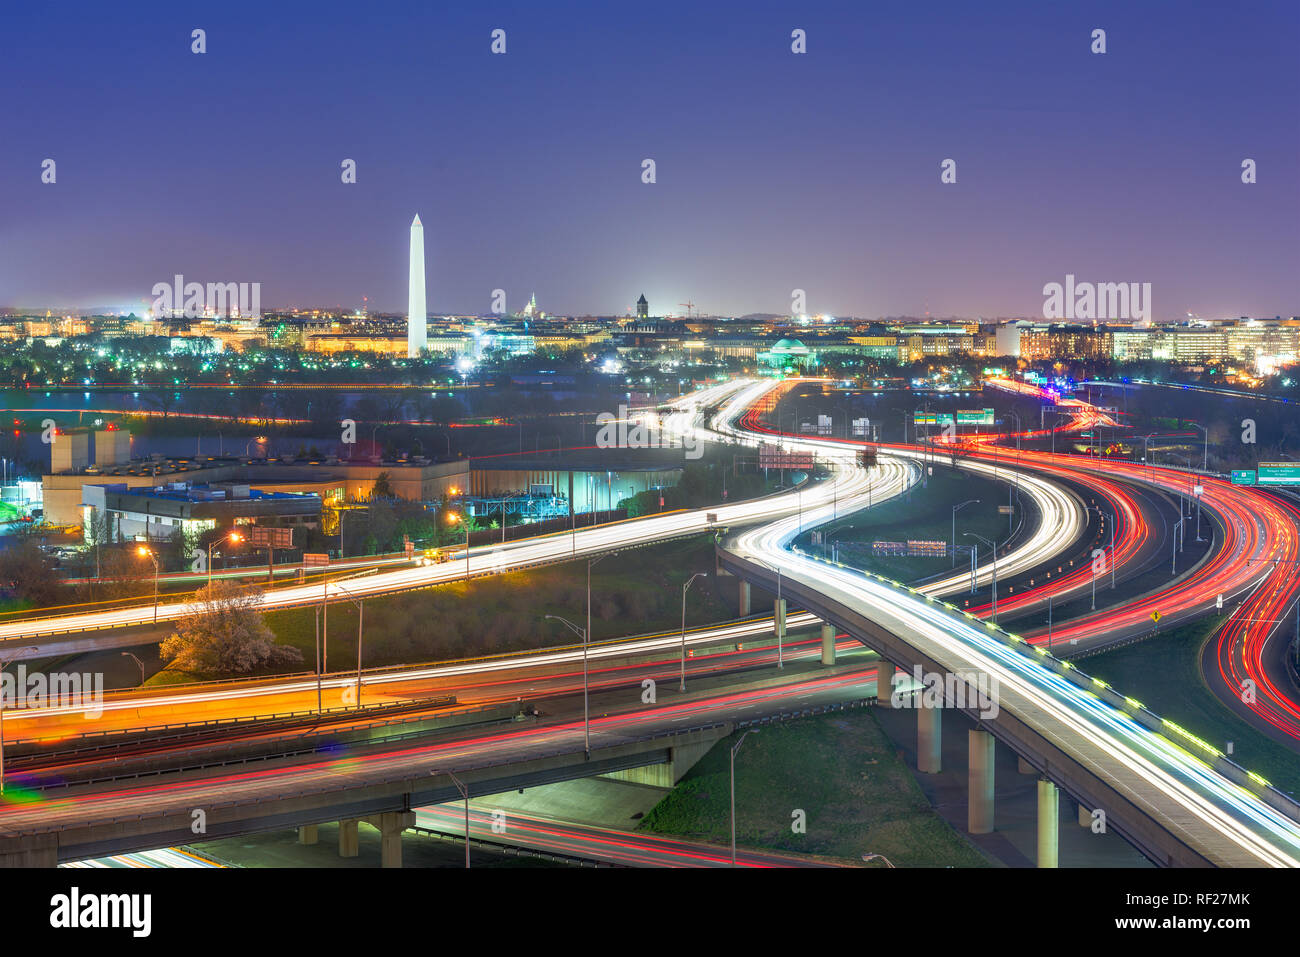 Washington, D.C. skyline with highways and monuments. Stock Photo